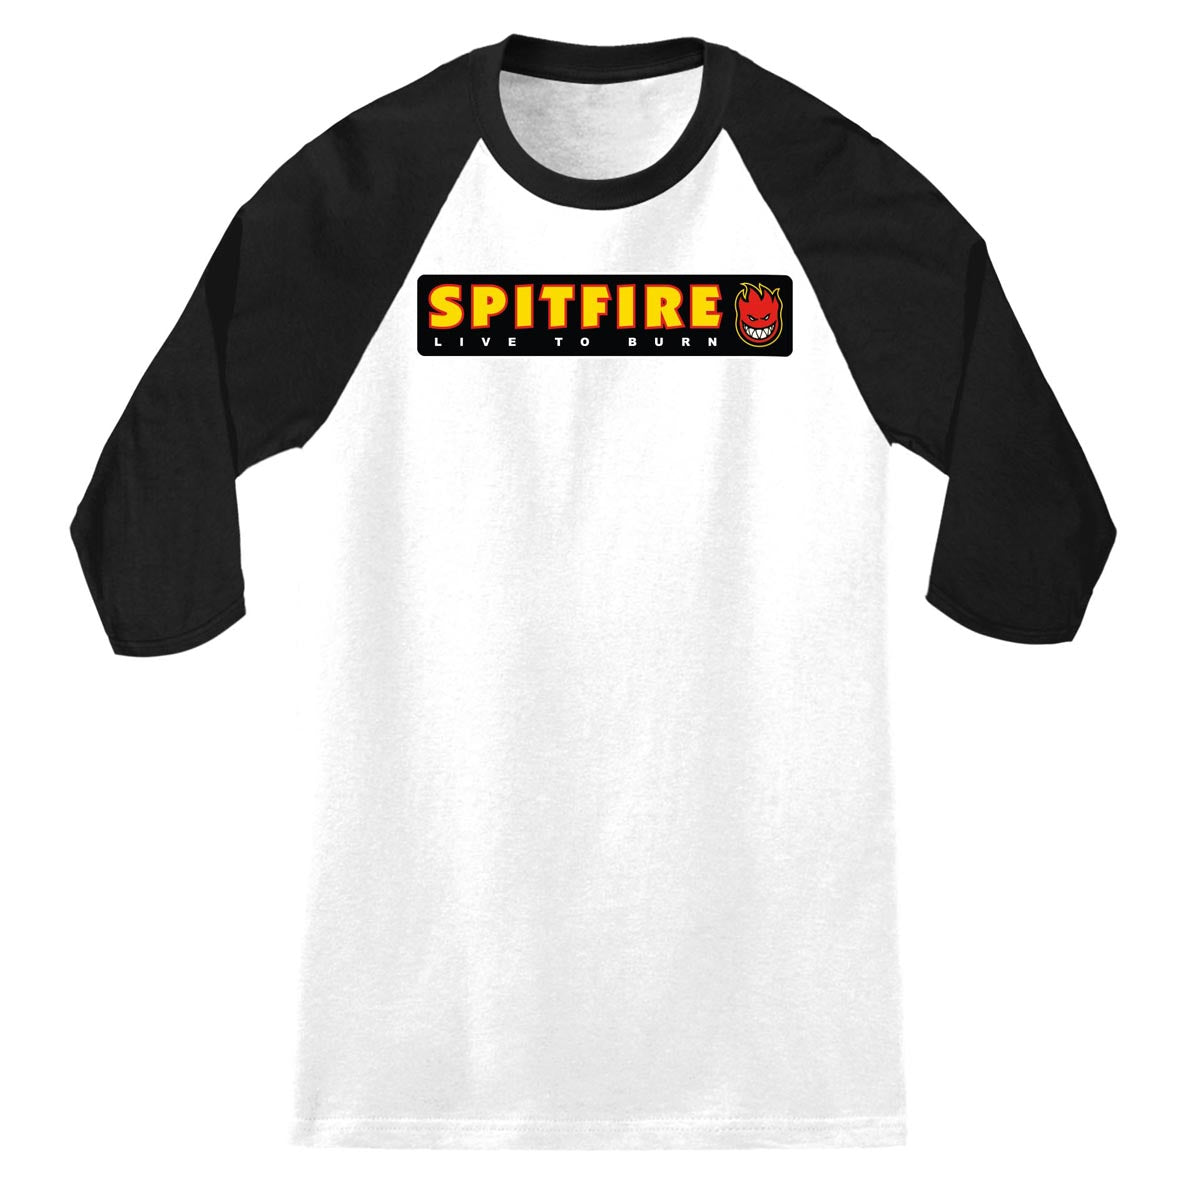 Spitfire Ltb Raglan T-Shirt - White/Black/Multi Color image 1